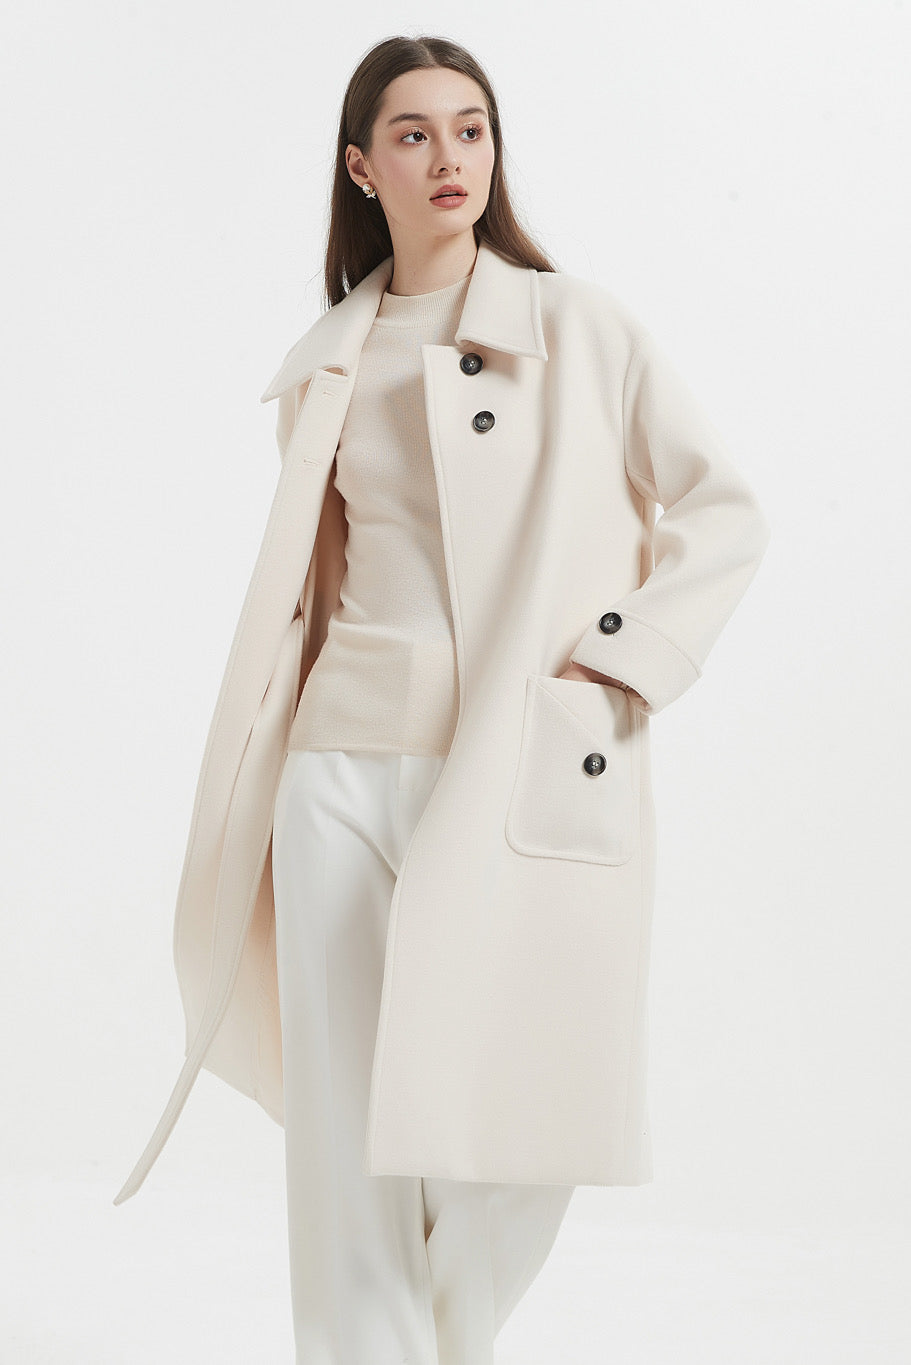 SKYE Shop Chic Modern Elegant Timeless Women Clothing French Parisian Minimalist Annabelle Long Wool Coat White 3